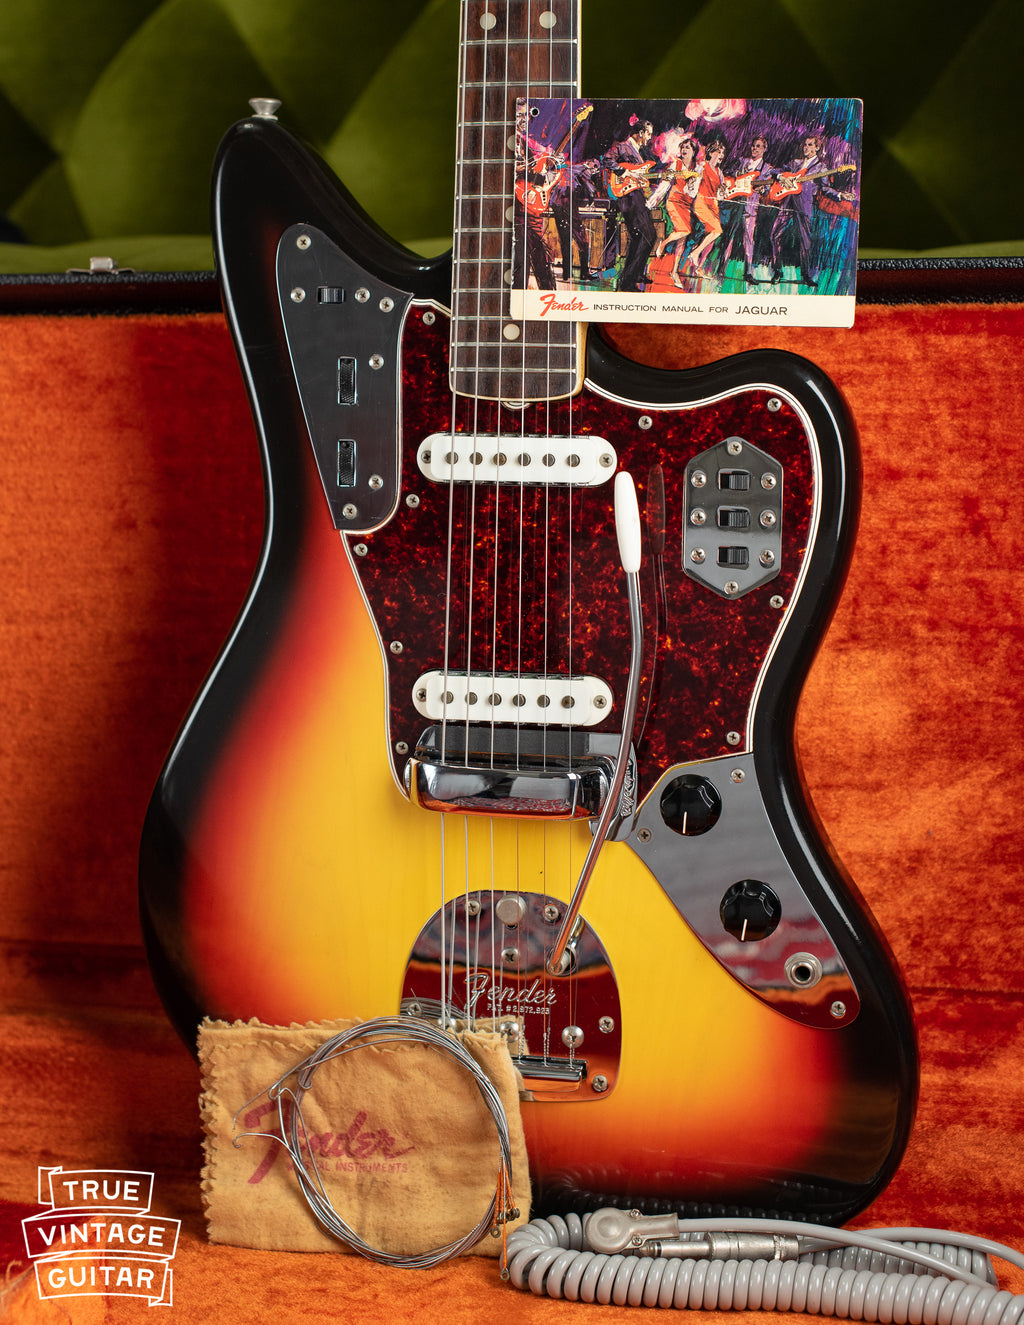 Vintage 1966 Fender Jaguar electric guitar, Sunburst finish, with hang tag and polish cloth